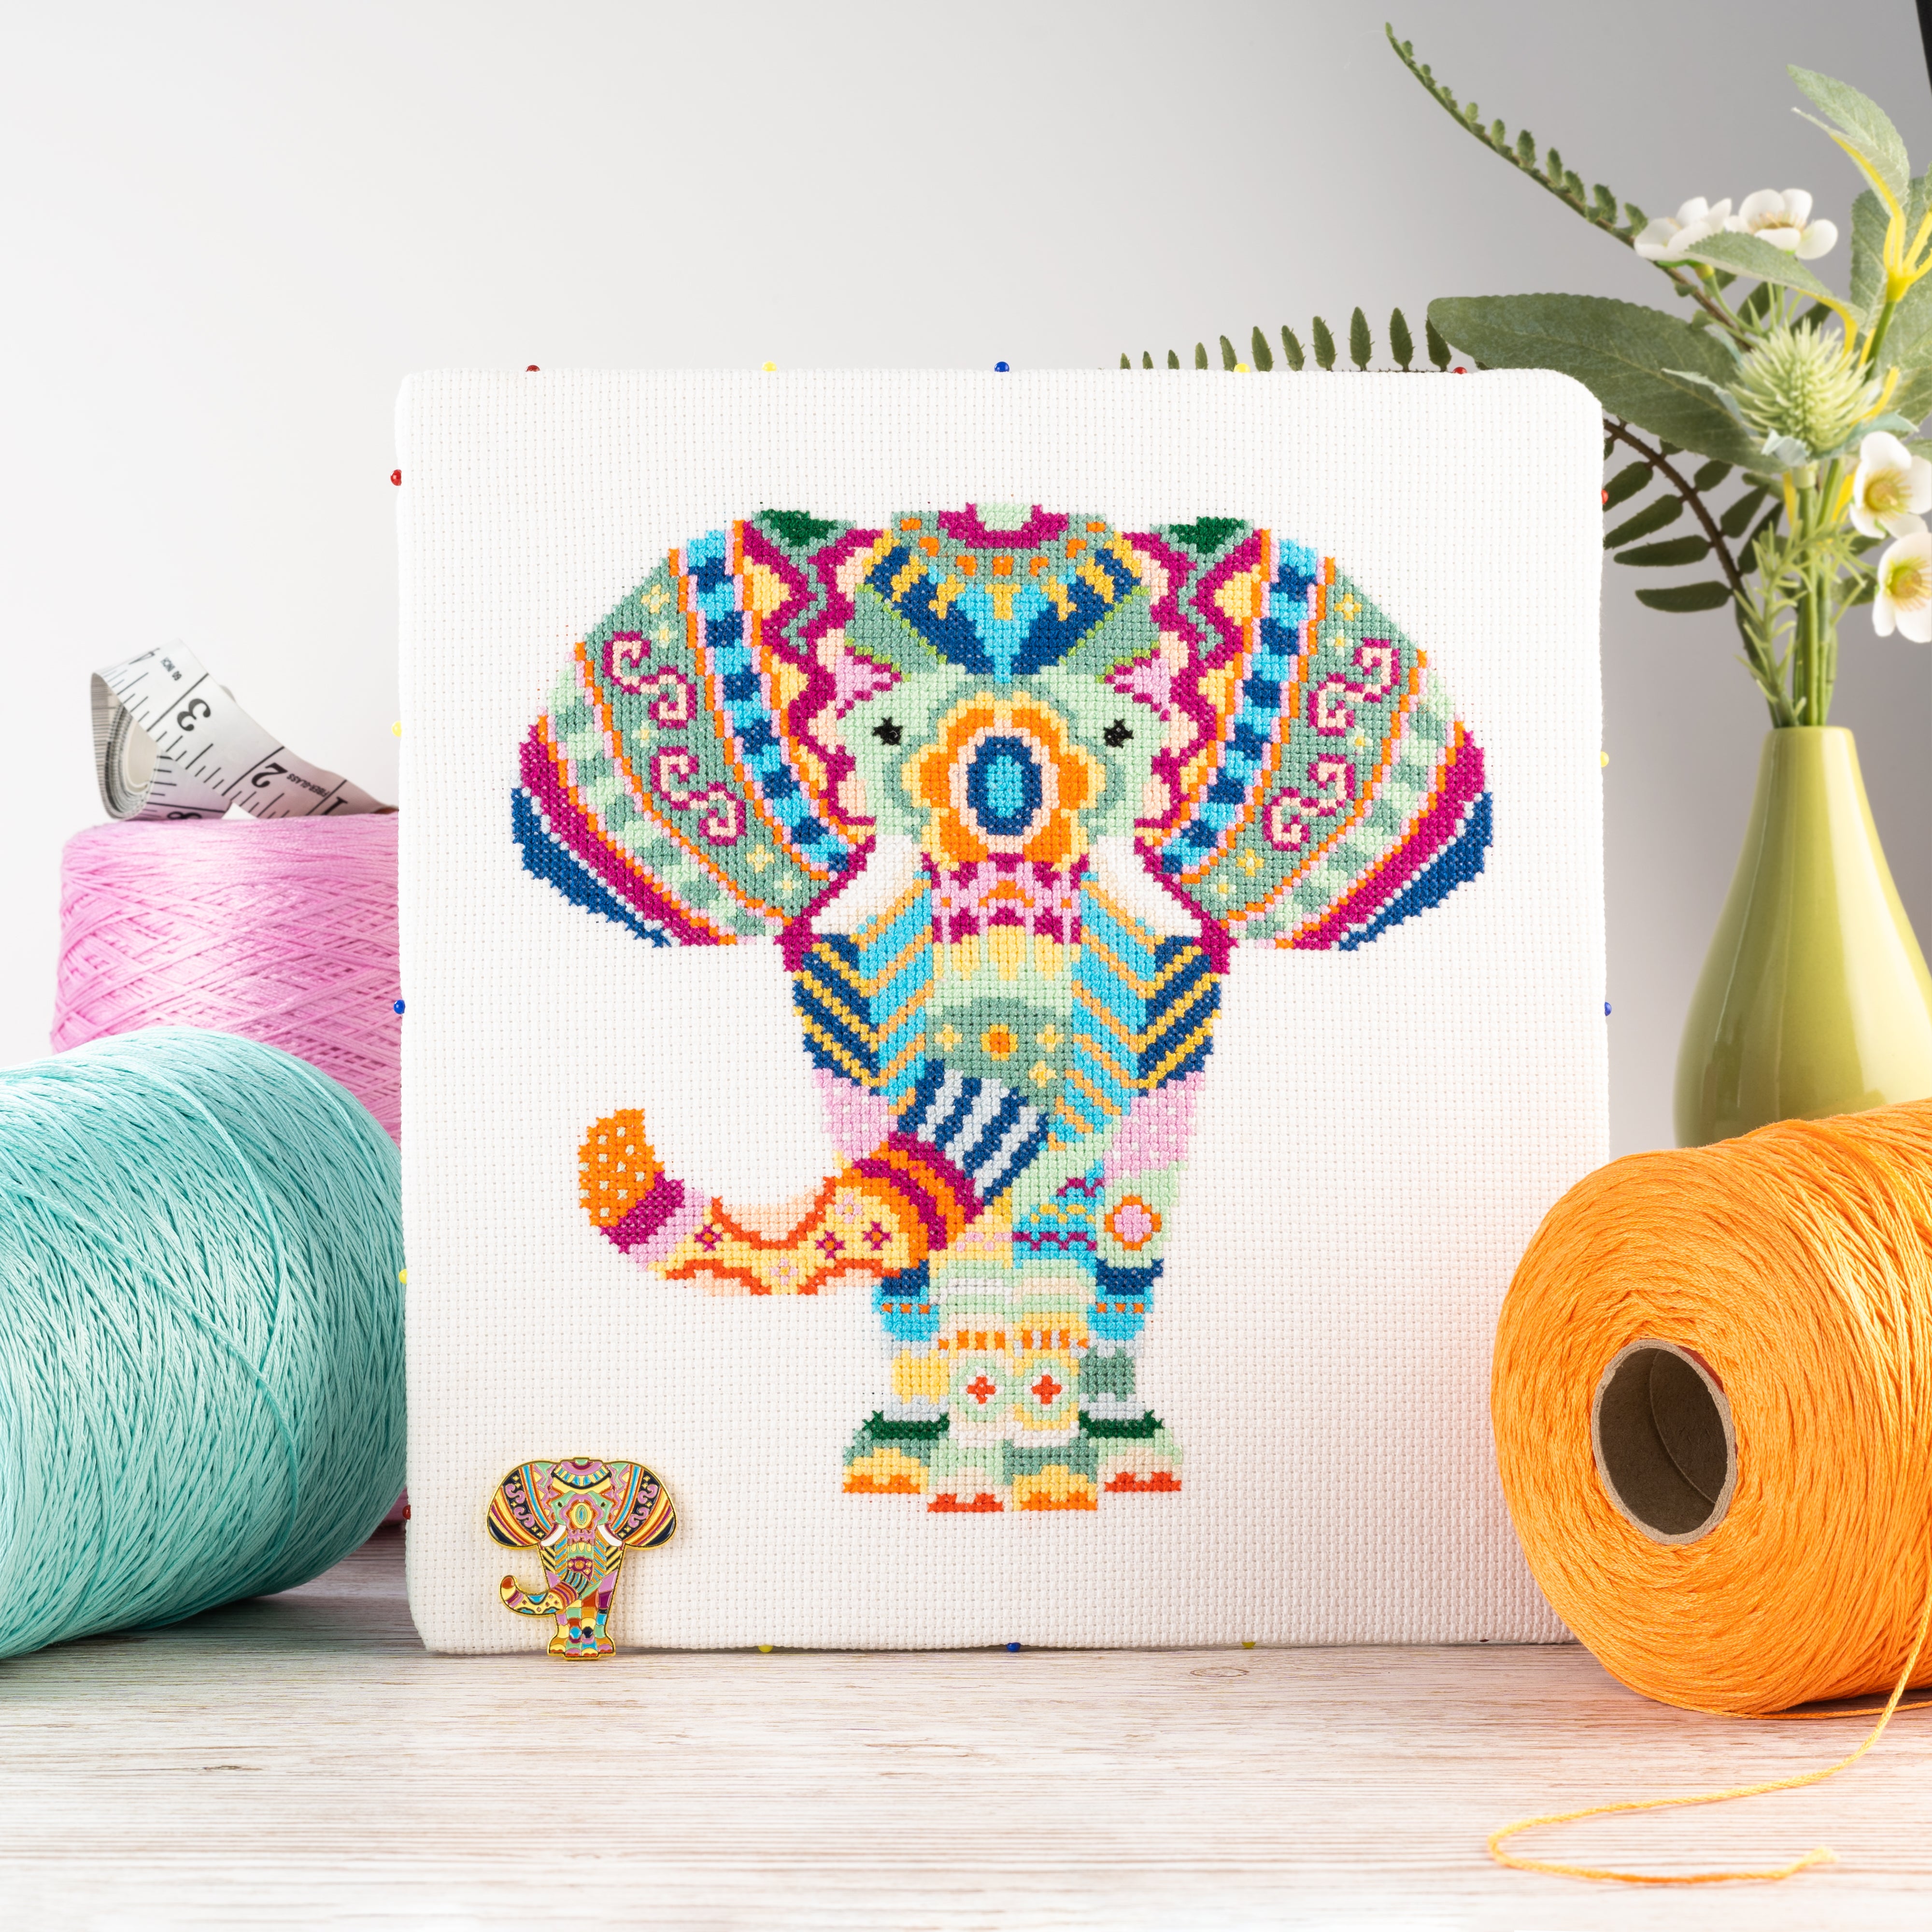 Meloca Designs Mandala Elephant cross stitch